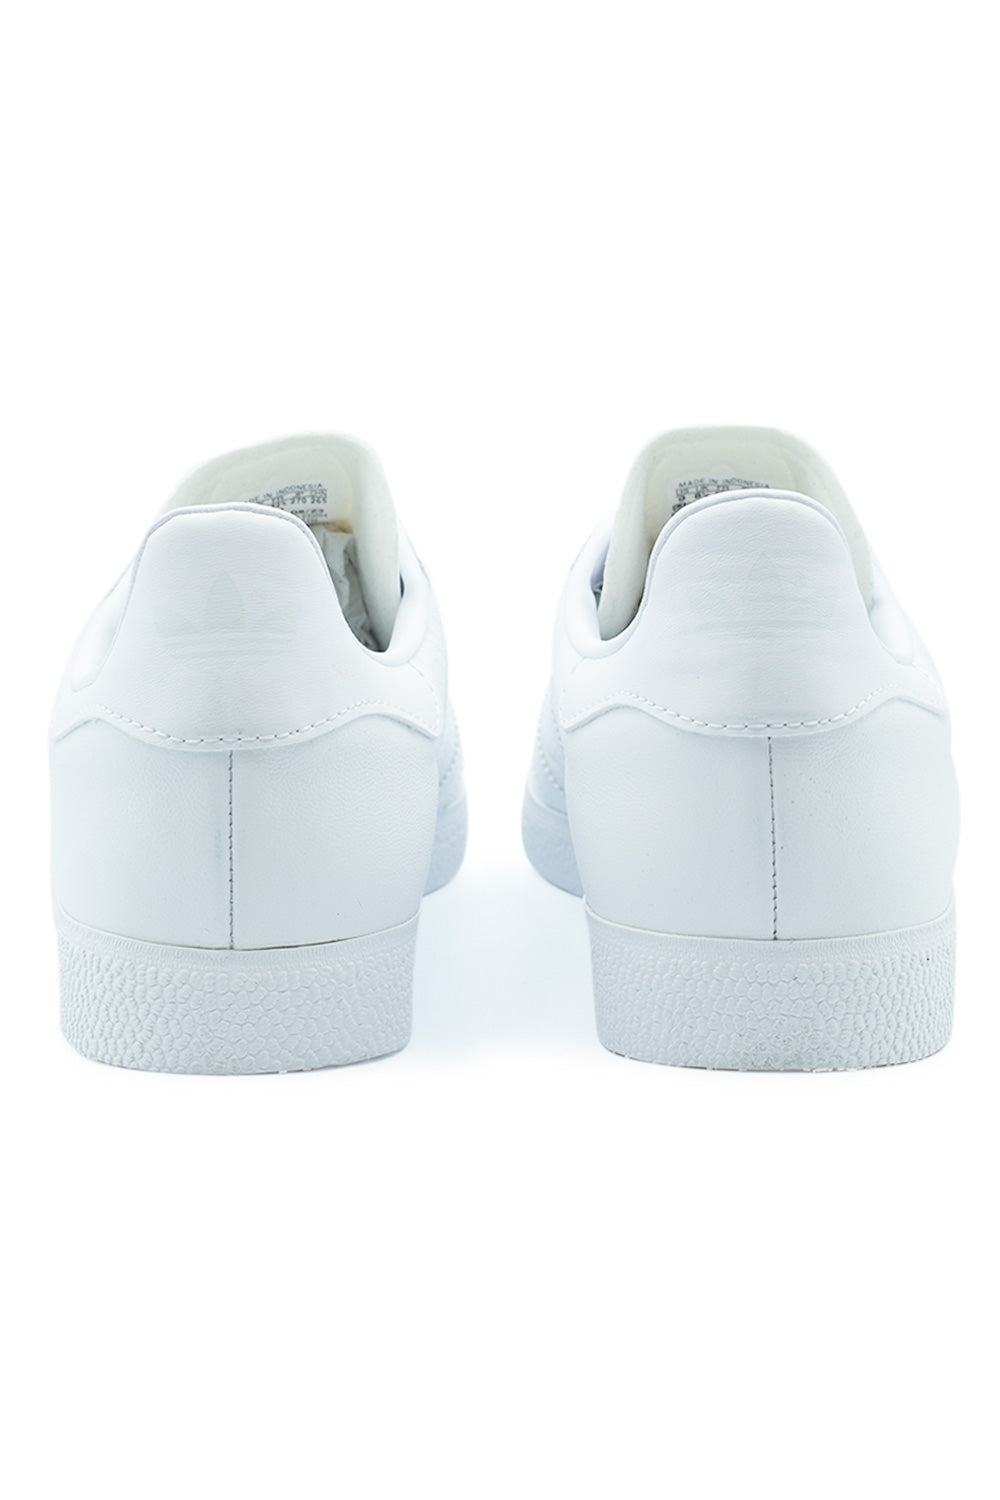 Adidas Gazelle Shoe Cloud White / Cloud White / Gold Metallic - BONKERS